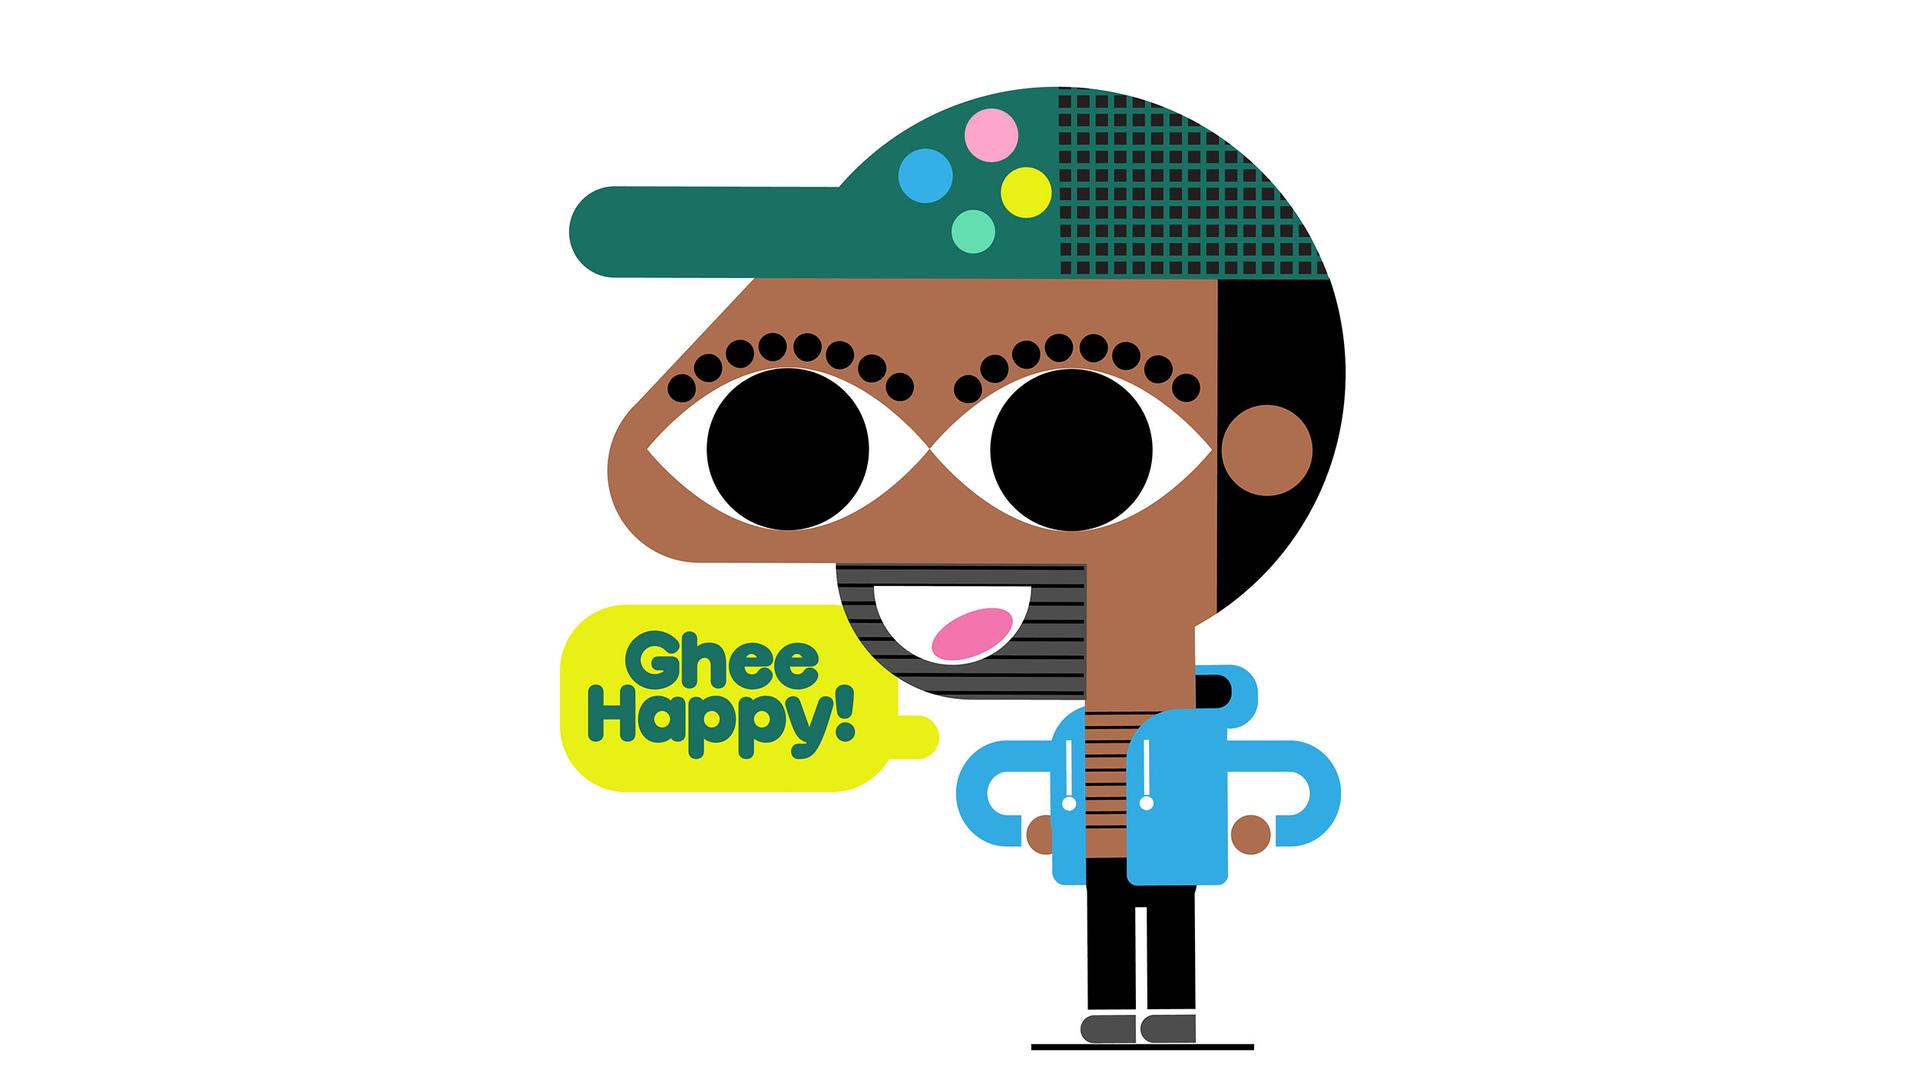 "Ghee Happy" creator